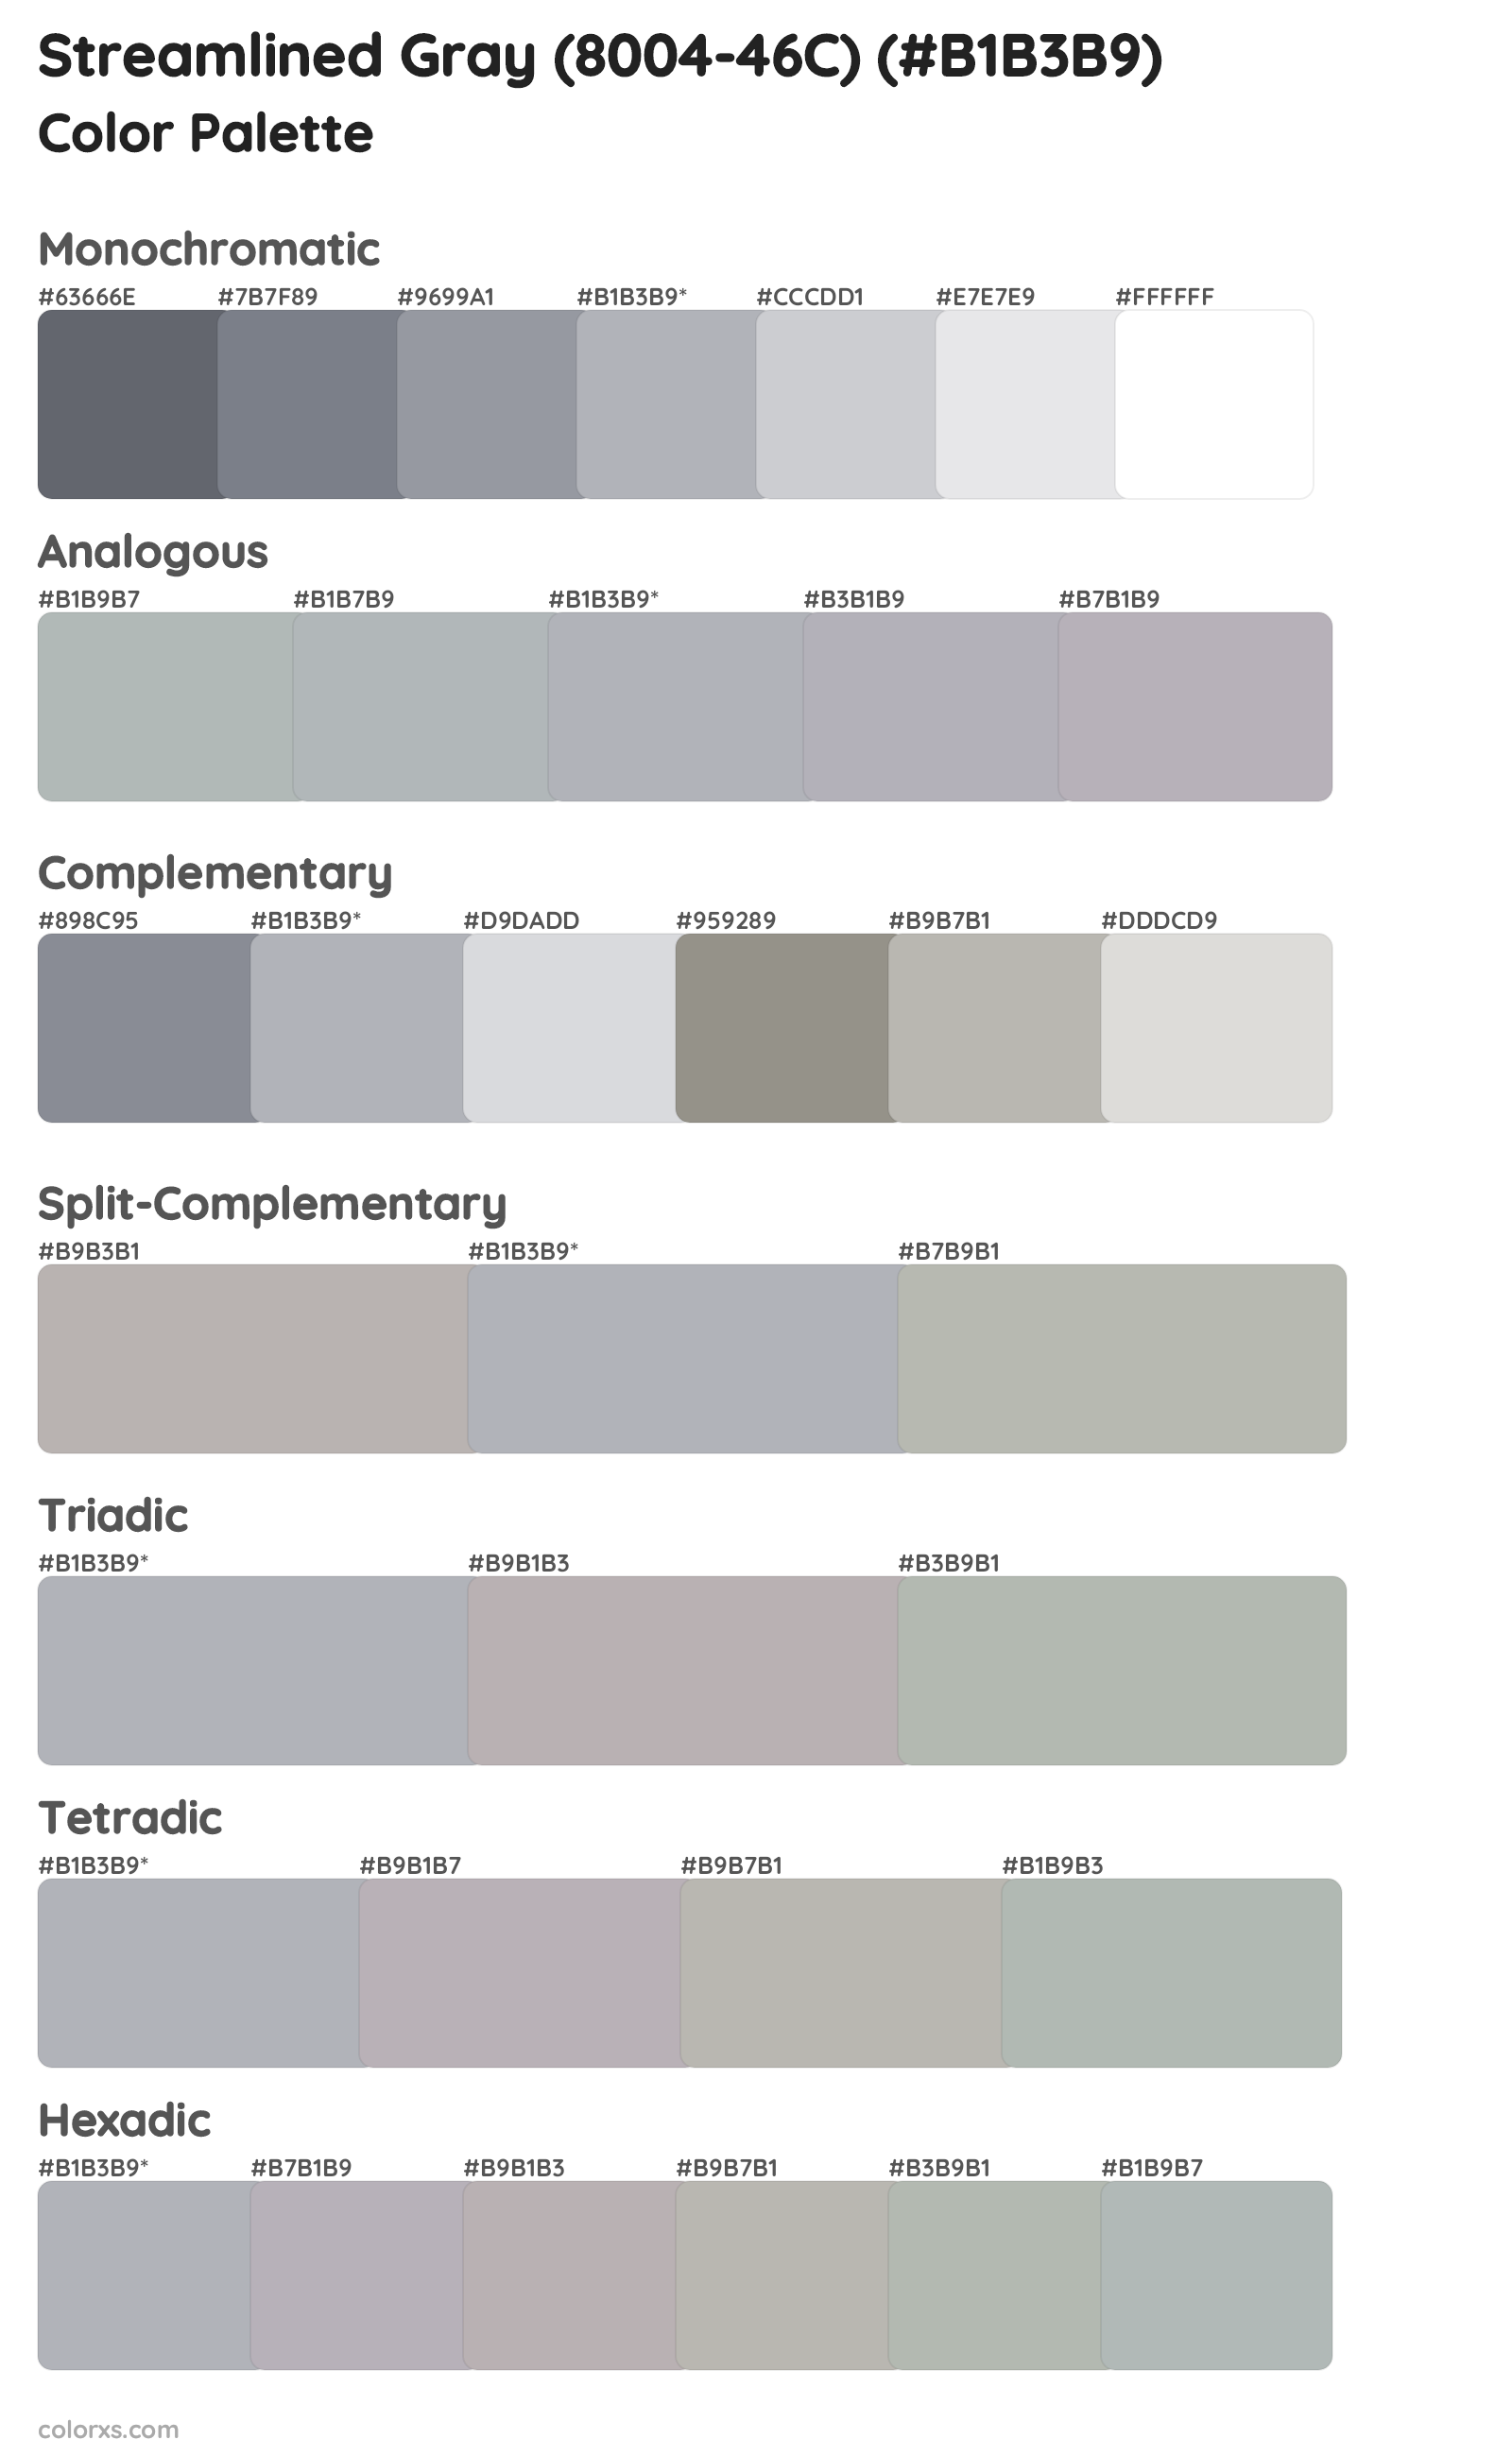 Streamlined Gray (8004-46C) Color Scheme Palettes